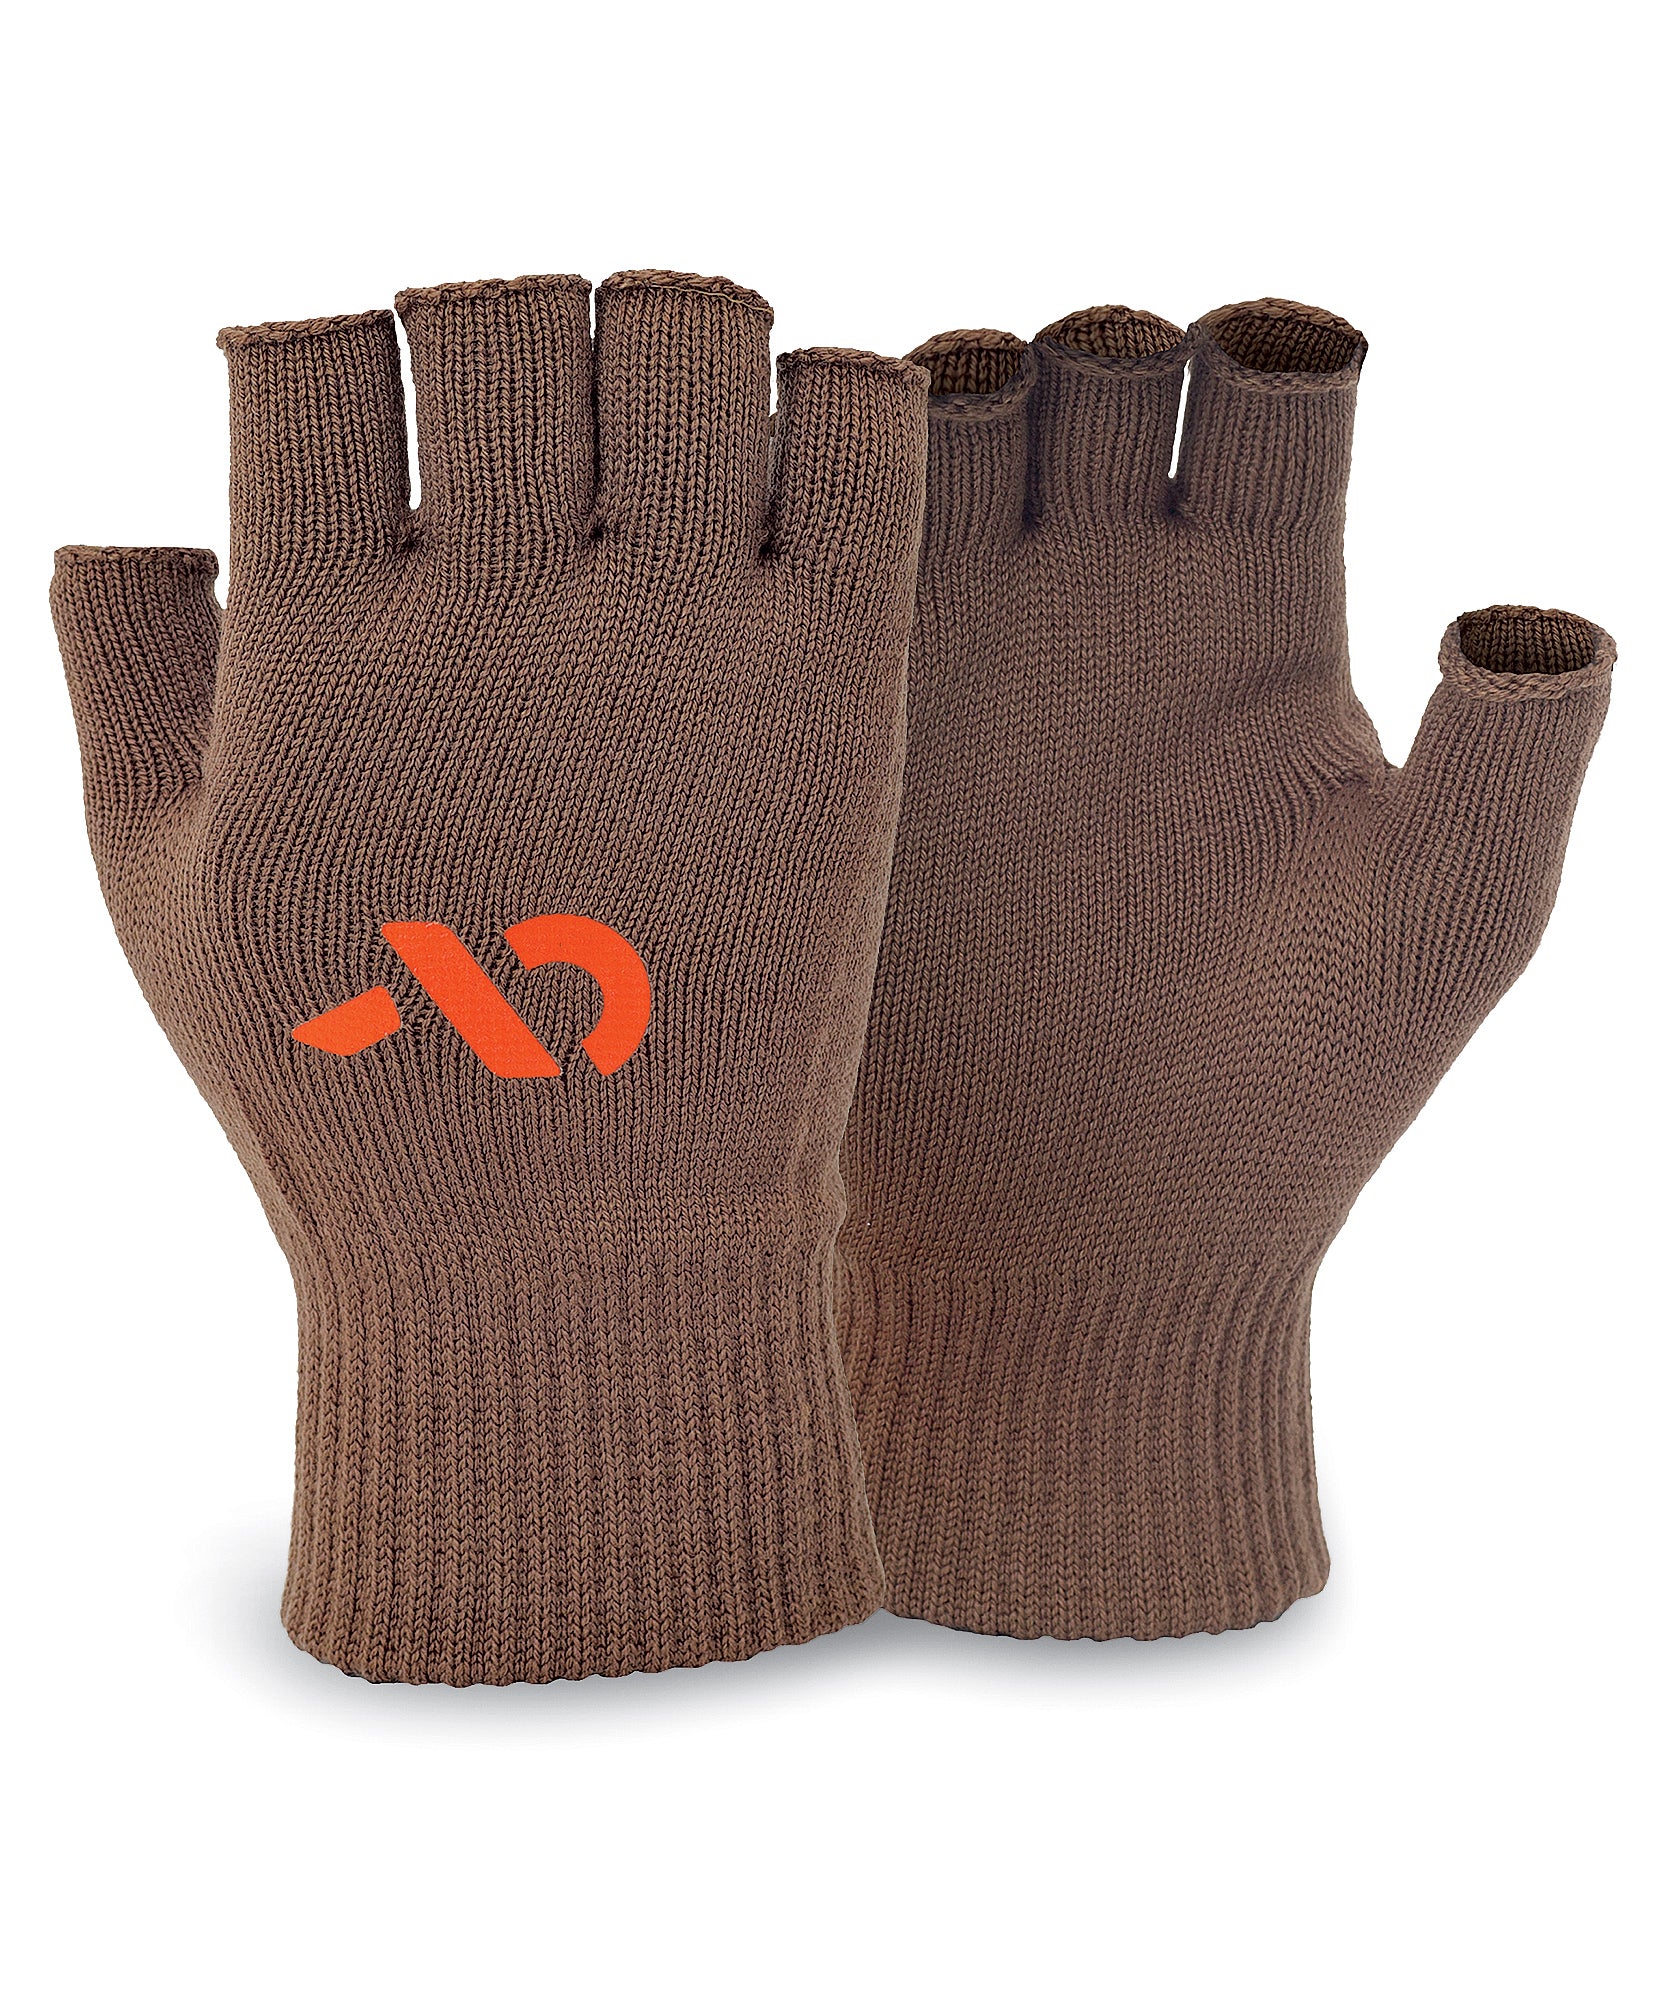 Merino Wool Hunting Gloves Hotsell | www.c1cu.com